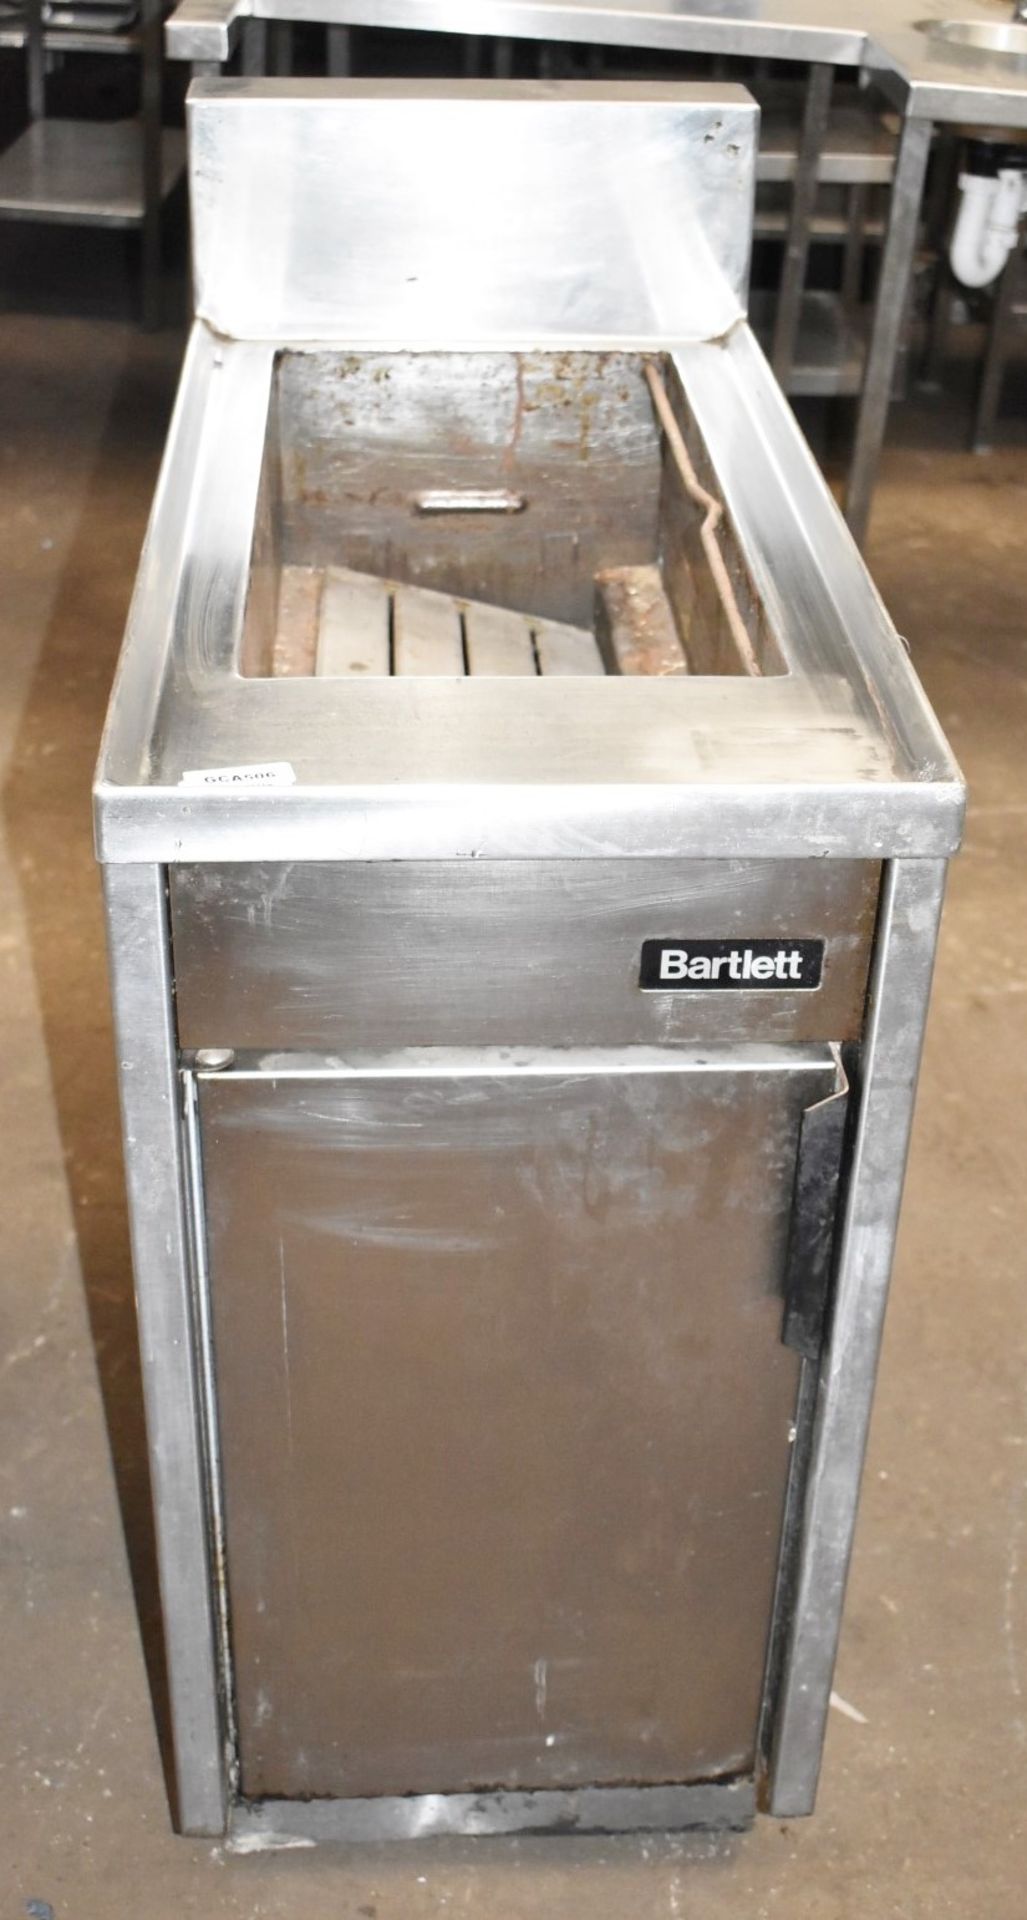 1 x Bartlett Commercial Electric Fryer - 40cm Width - CL011 - Ref: GCA506 WH5 - Location: Altrincham